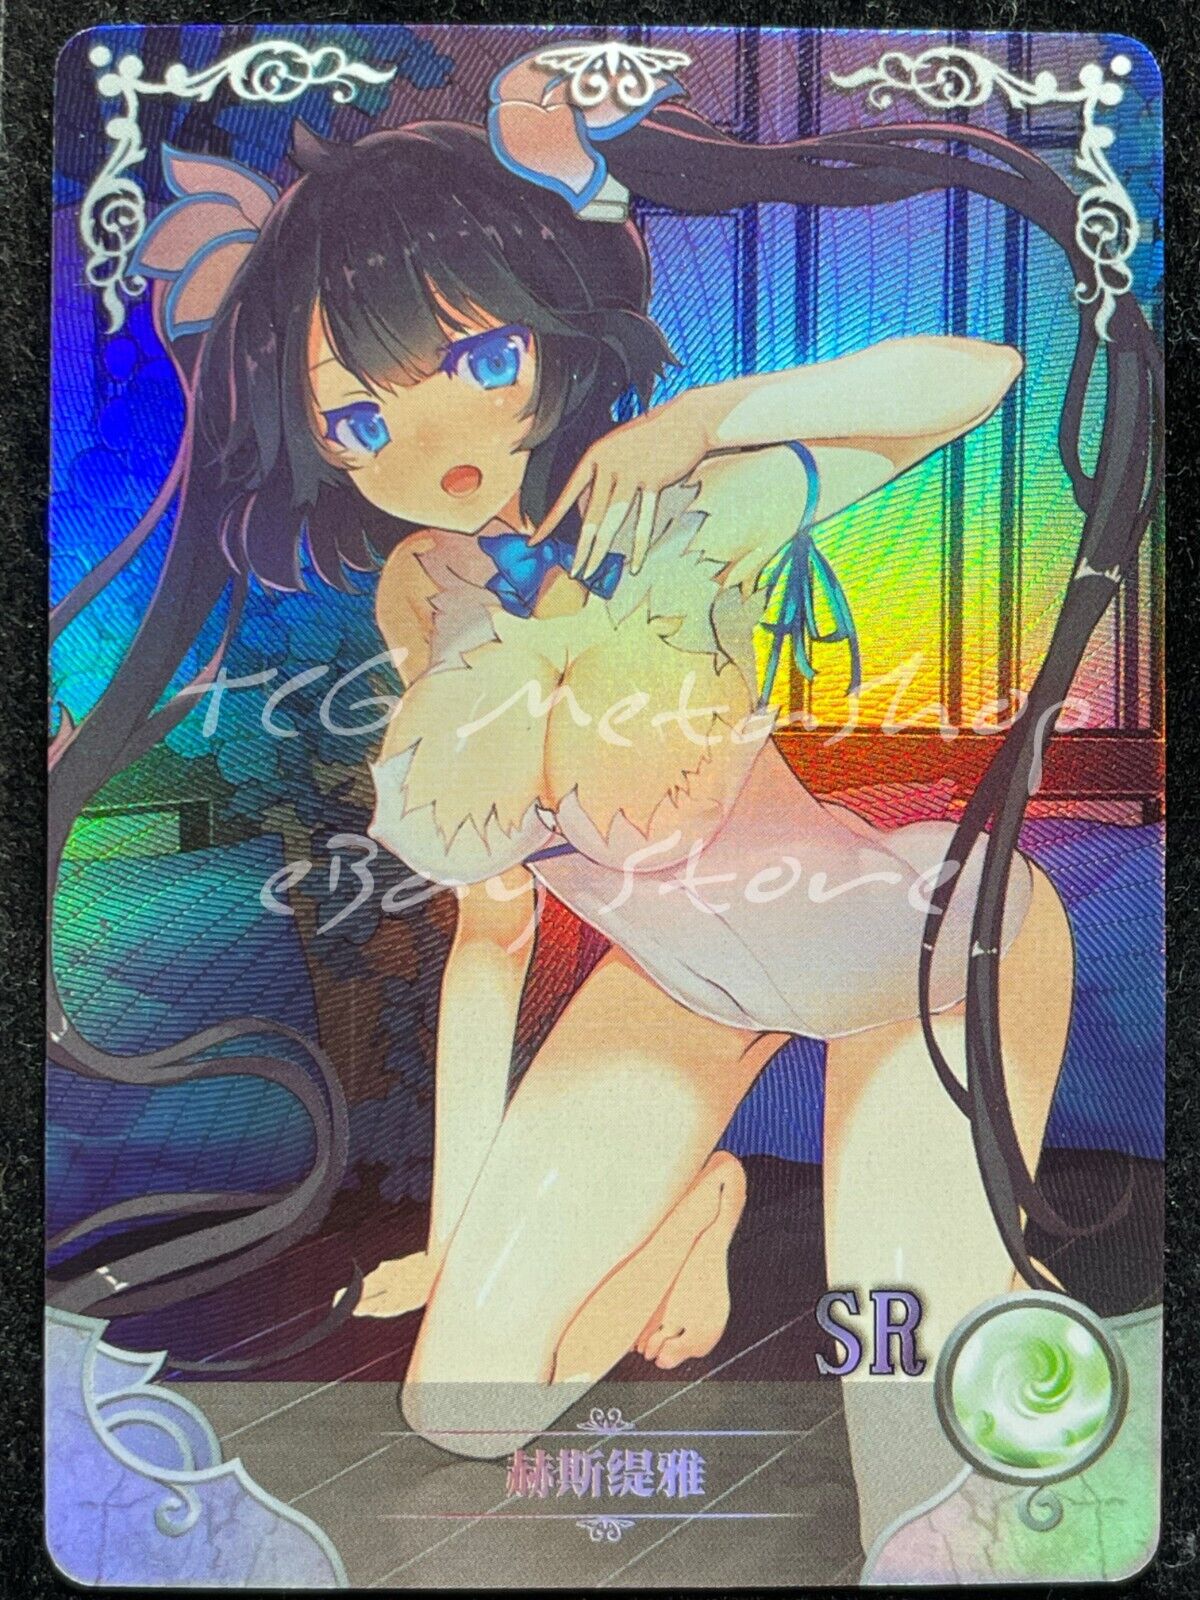 🔥 2m08 [Pick Your Singles] Goddess Story Waifu Anime PTR PR SSR SR Cards 🔥